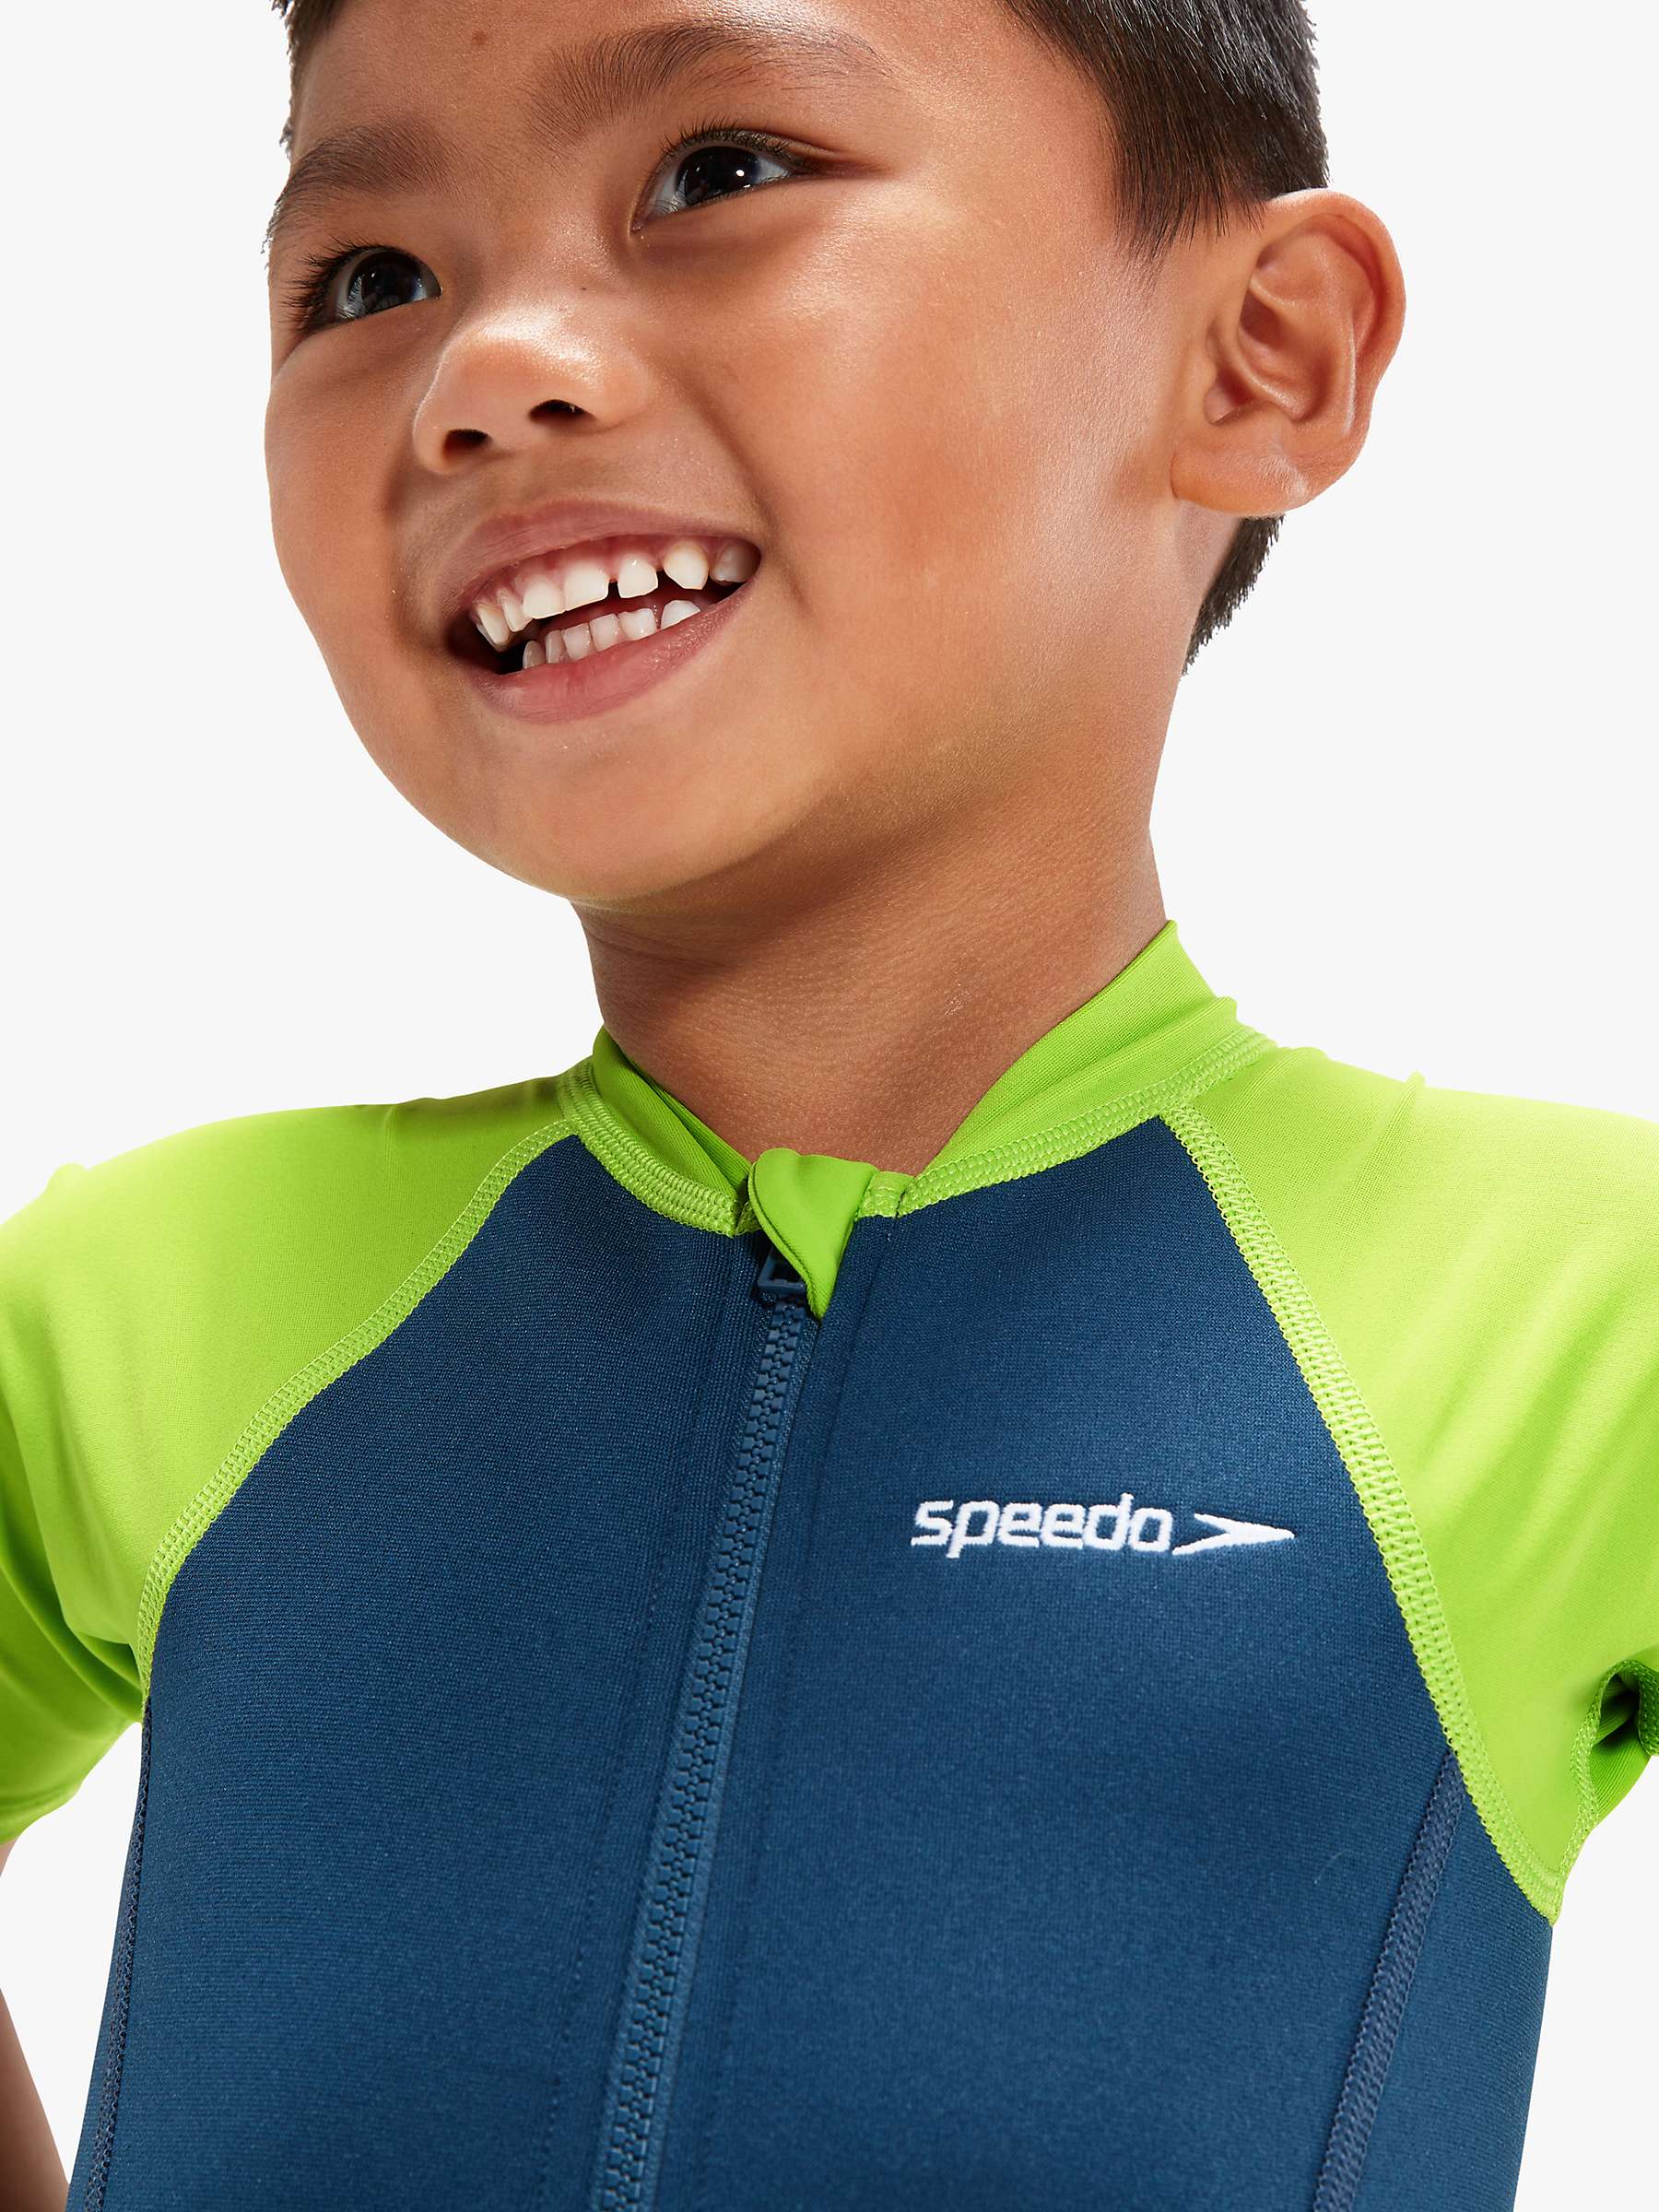 Buy Speedo Kids Shortie Wetsuit, Blue/Green Online at johnlewis.com